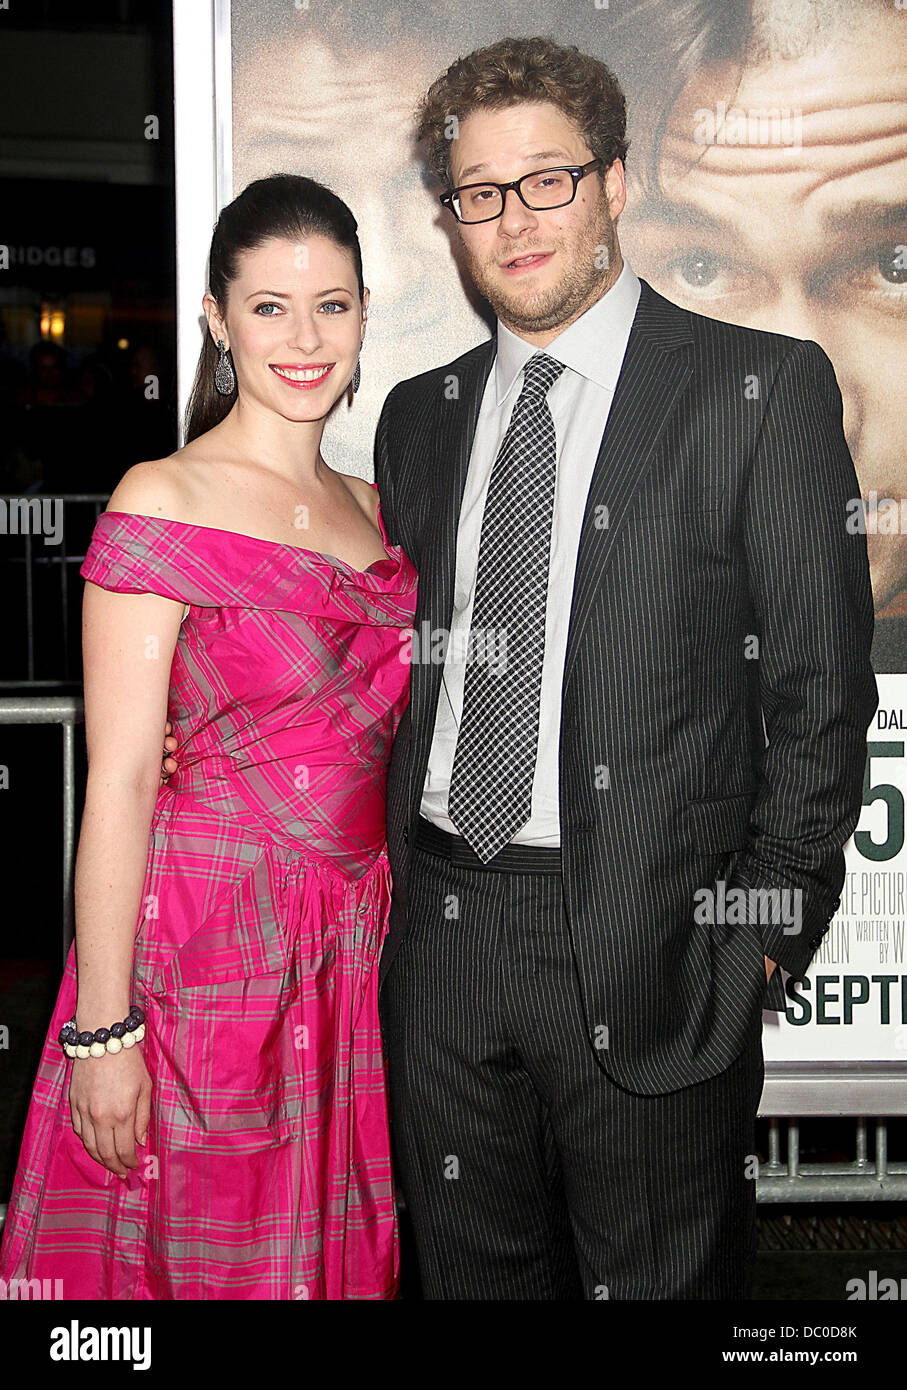 Lauren Miller and Seth Rogen 50/50 New York premiere - Arrivals New York City, USA - 26.09.11 Stock Photo